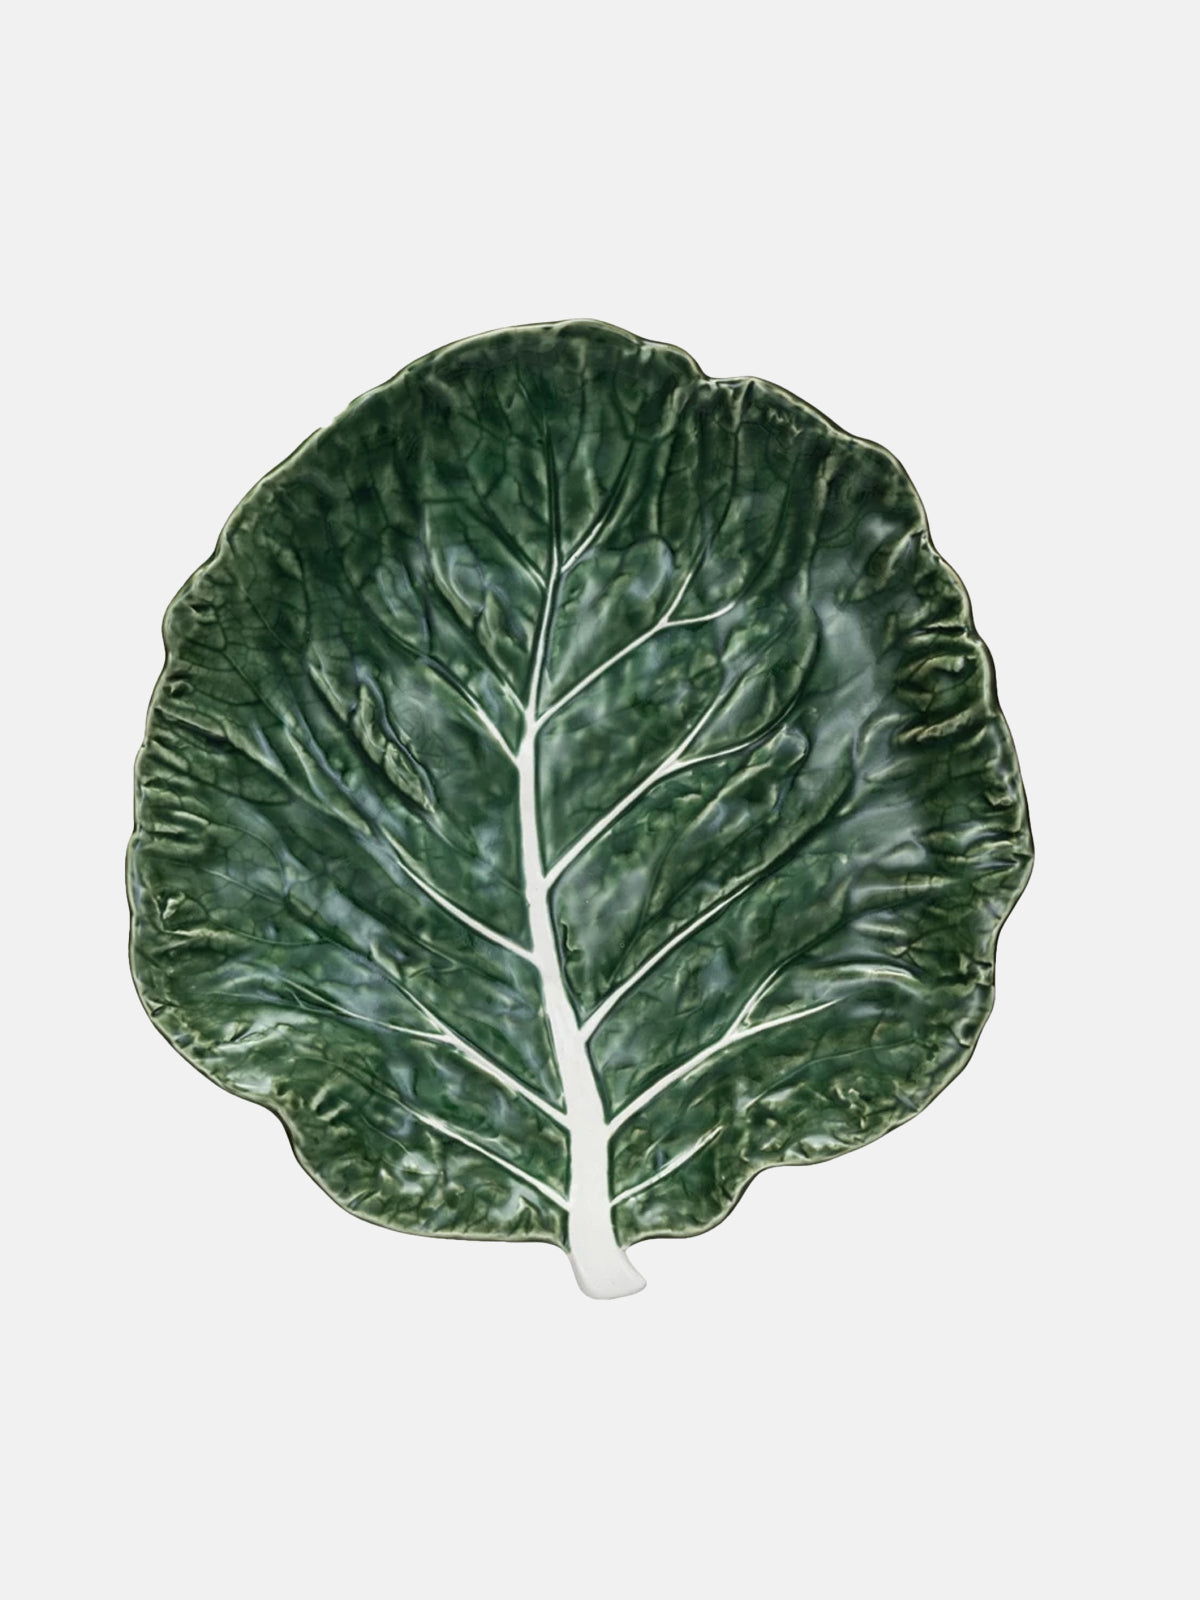 Stoneware Cabbage Plate